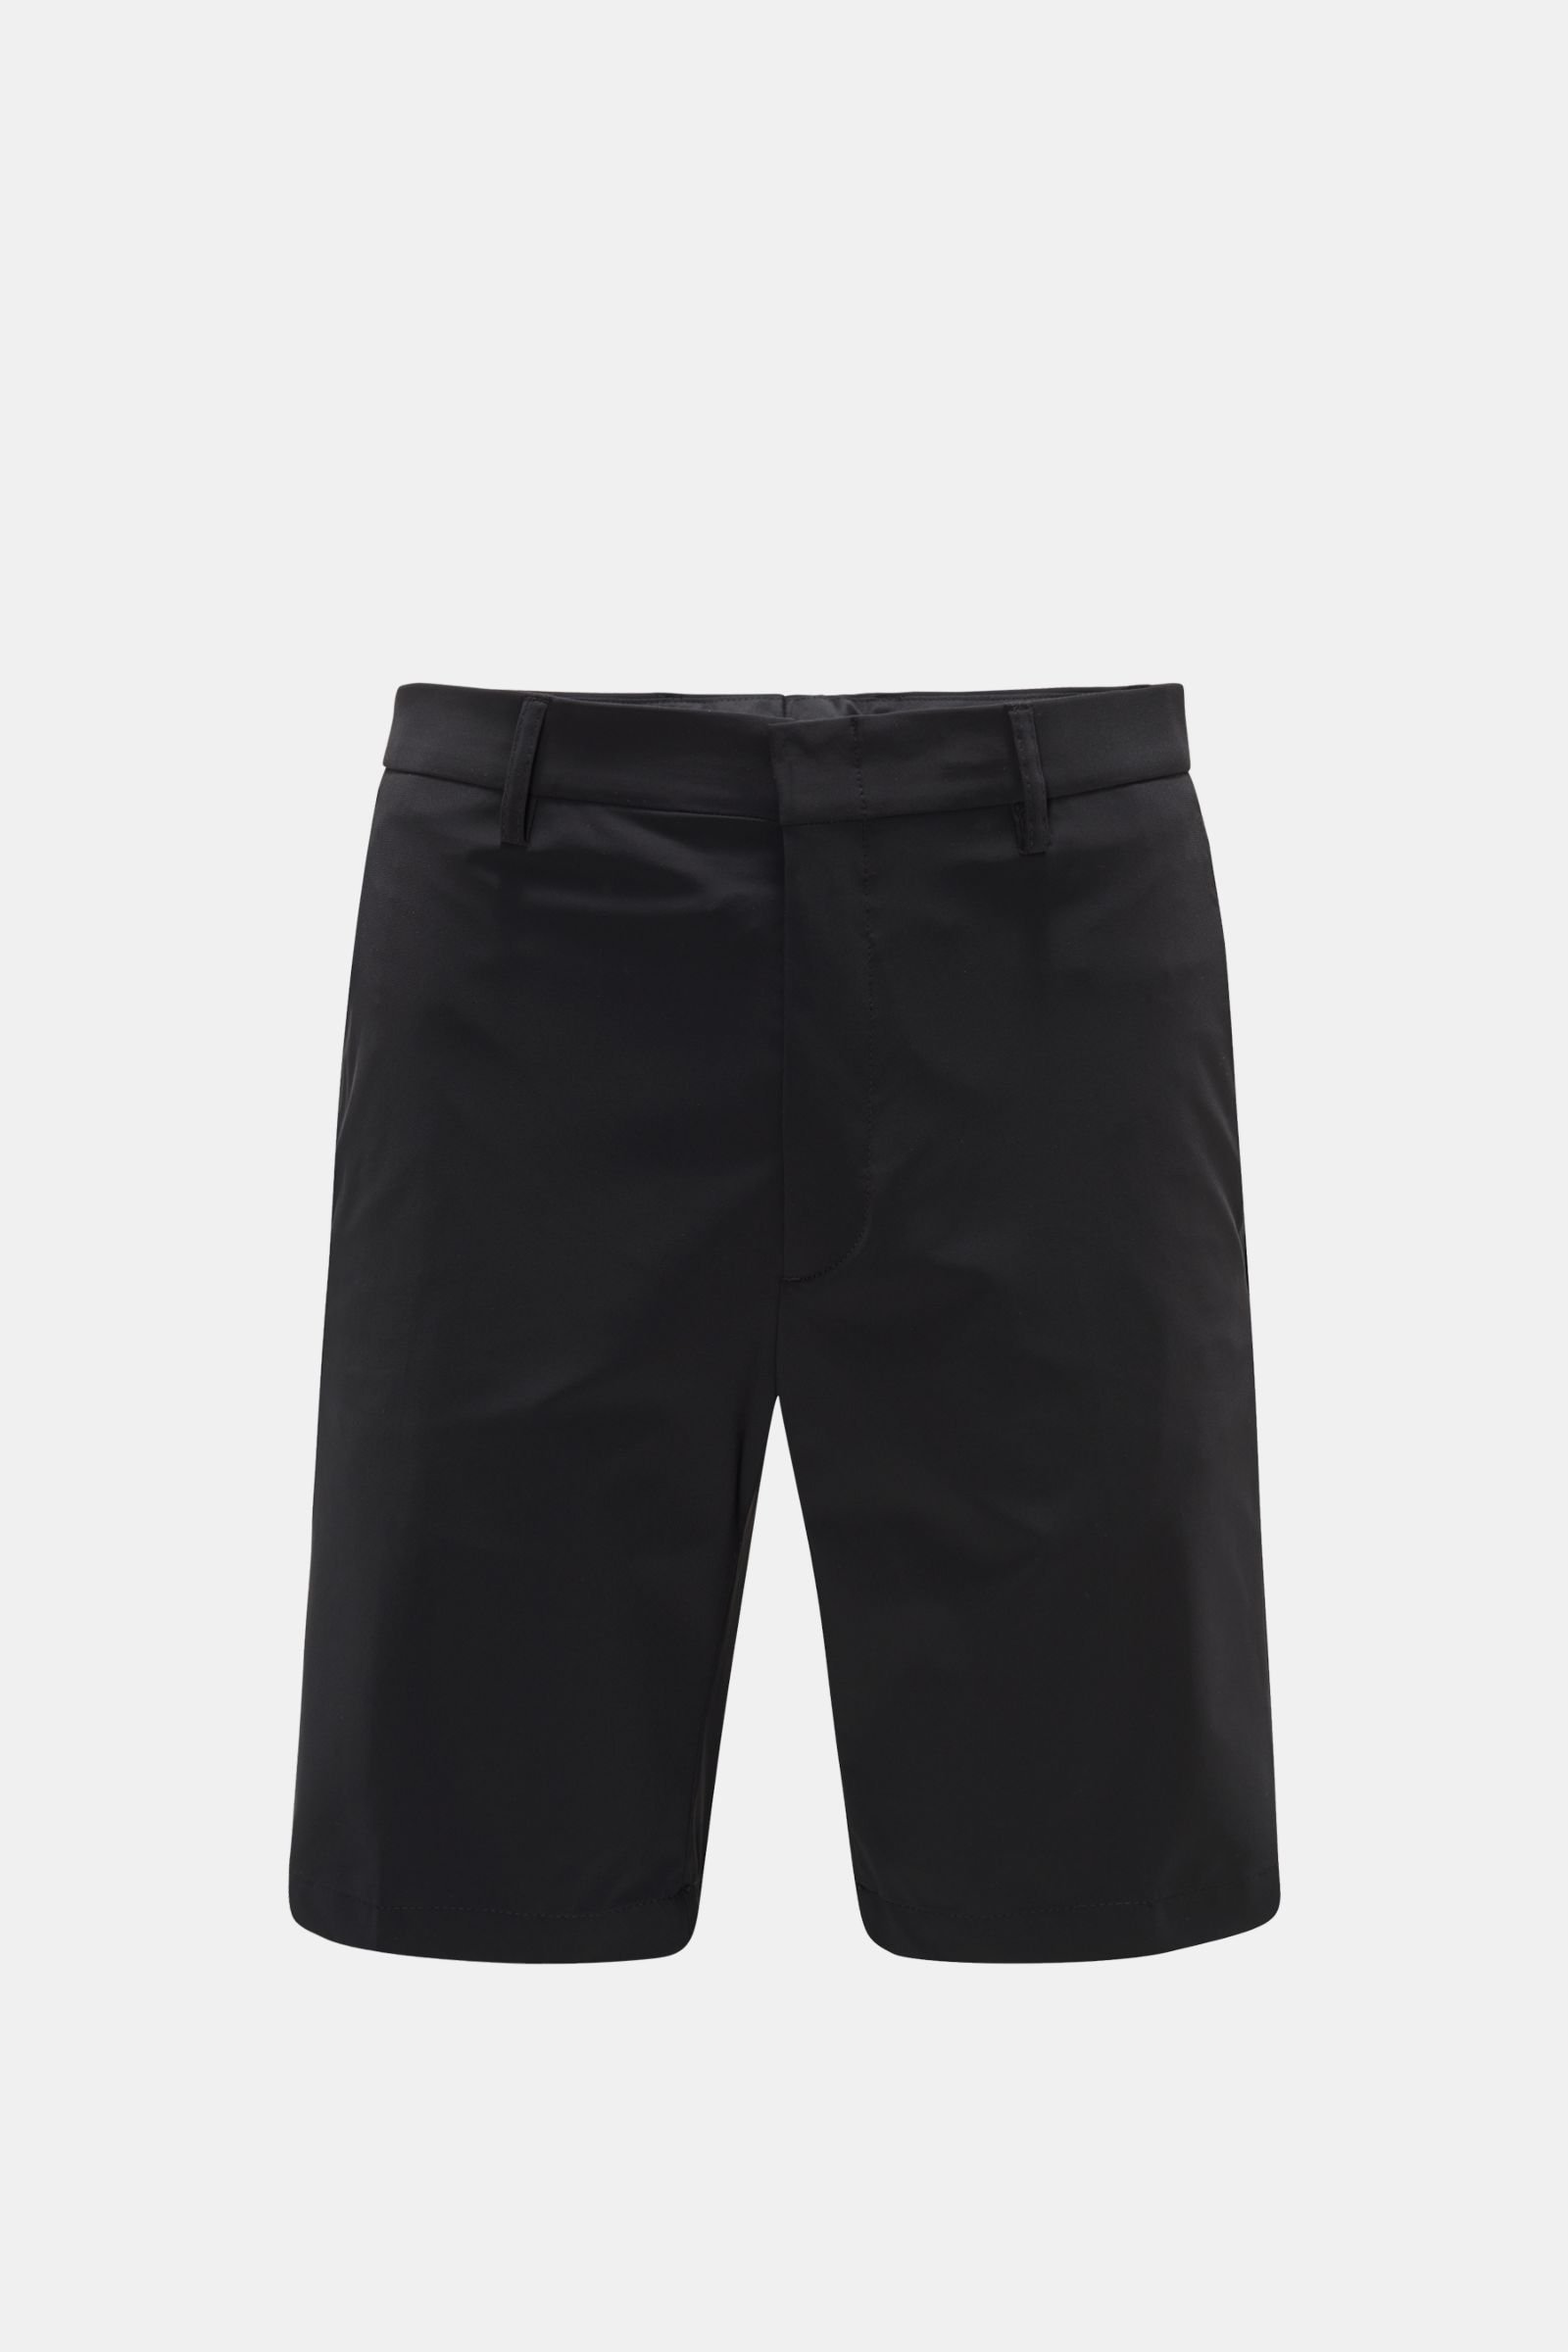 Bermuda shorts black